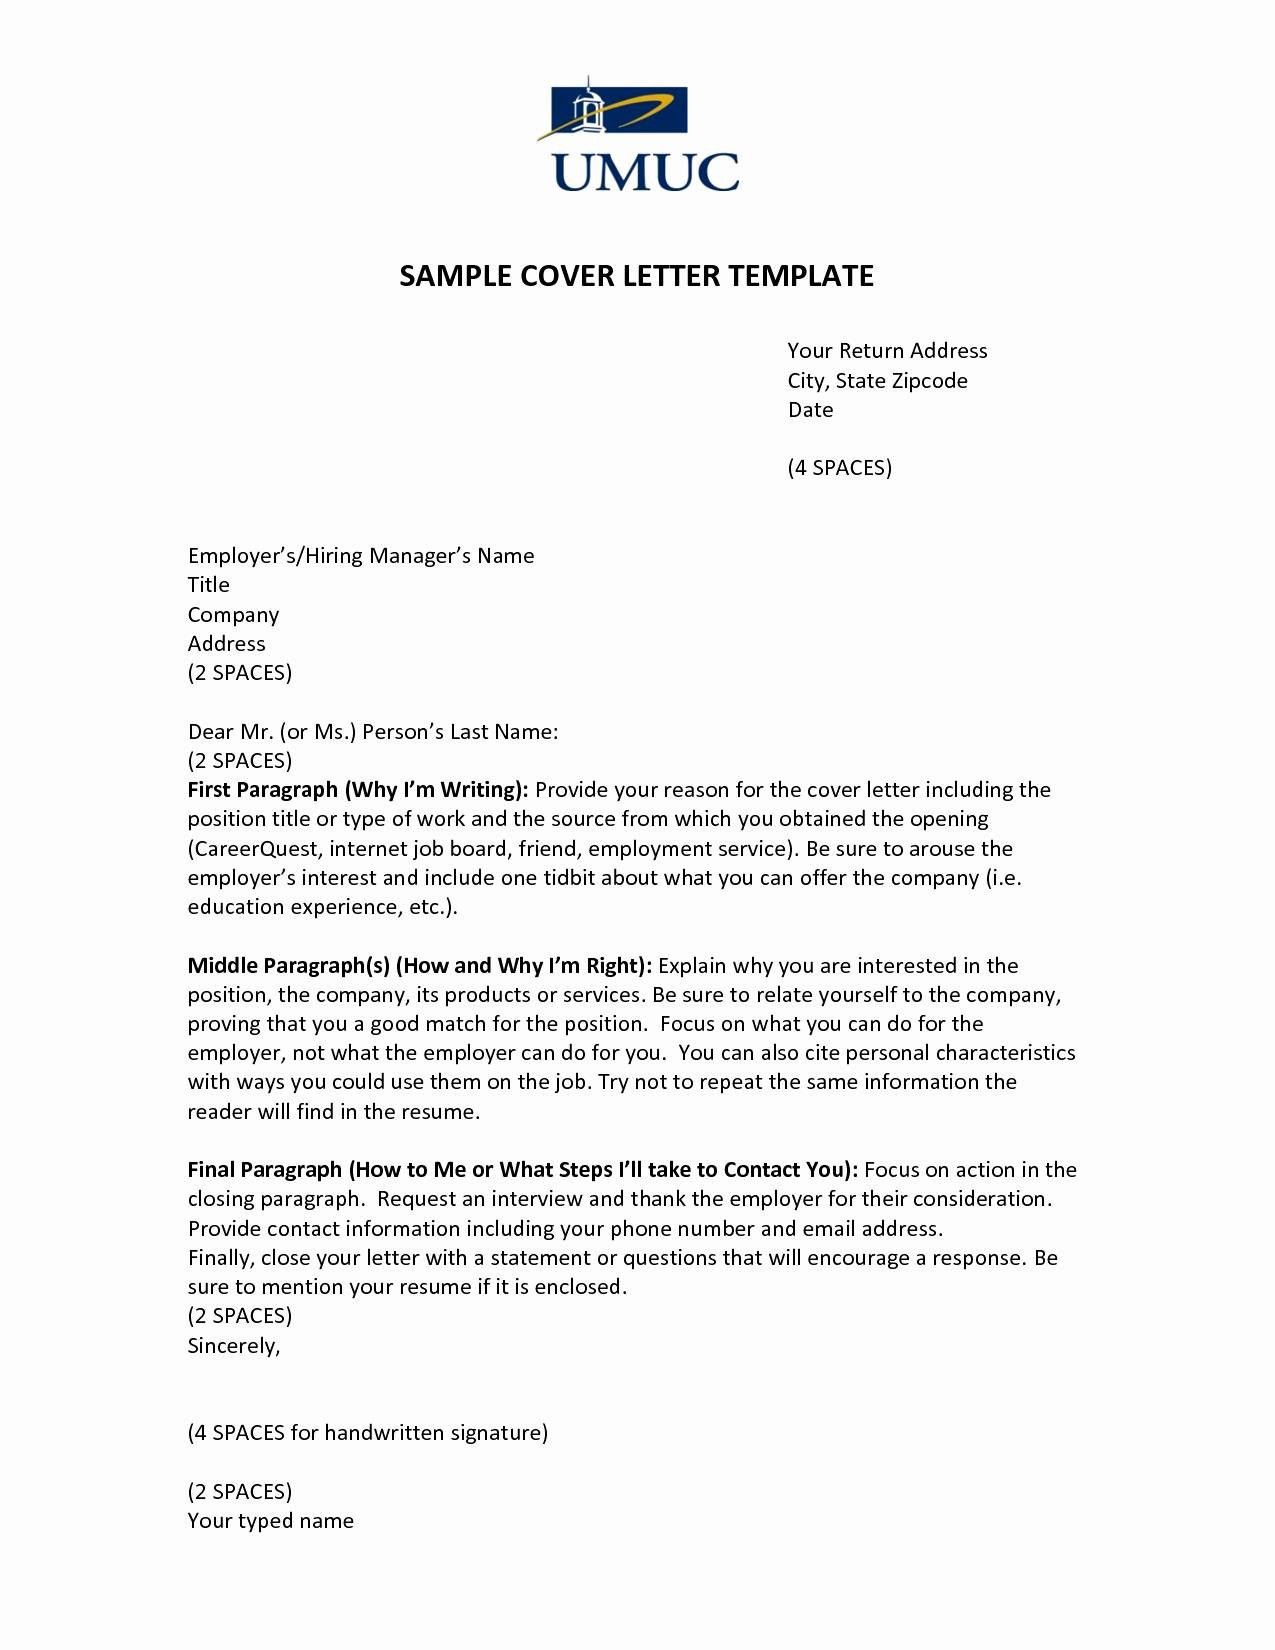 Closing Remarks Sample For Application Letter